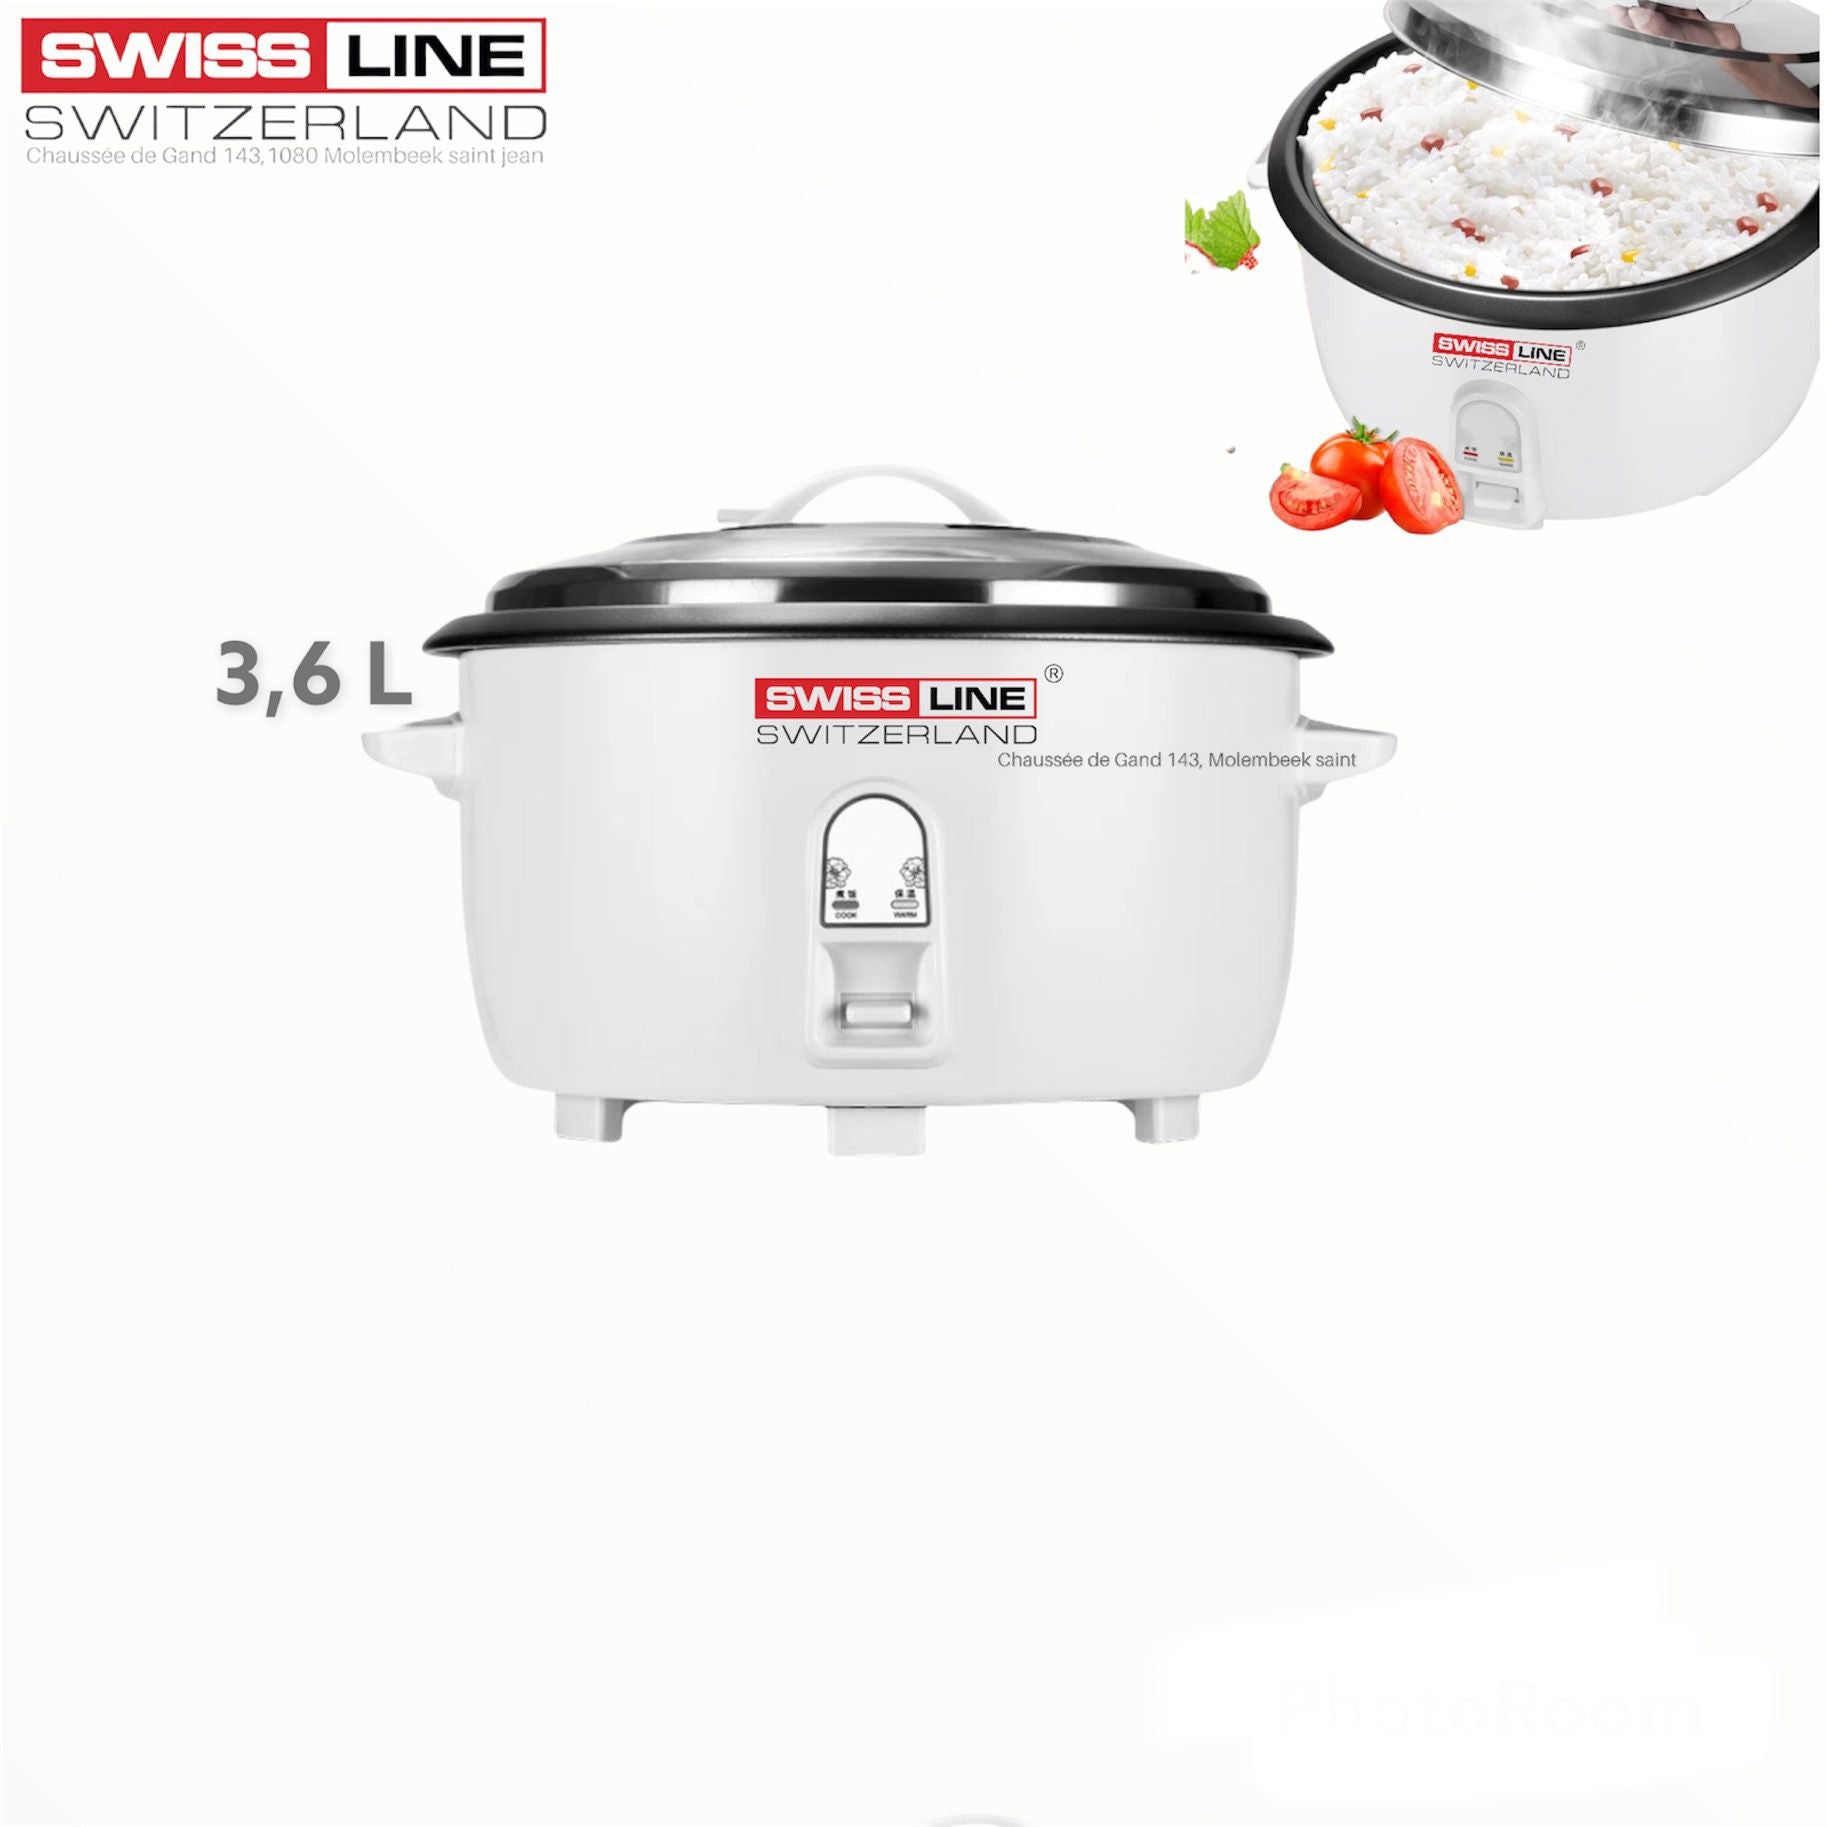 rice cooker/ rice cooker 3.6 L / 5.6 L / 8 L / 12 L